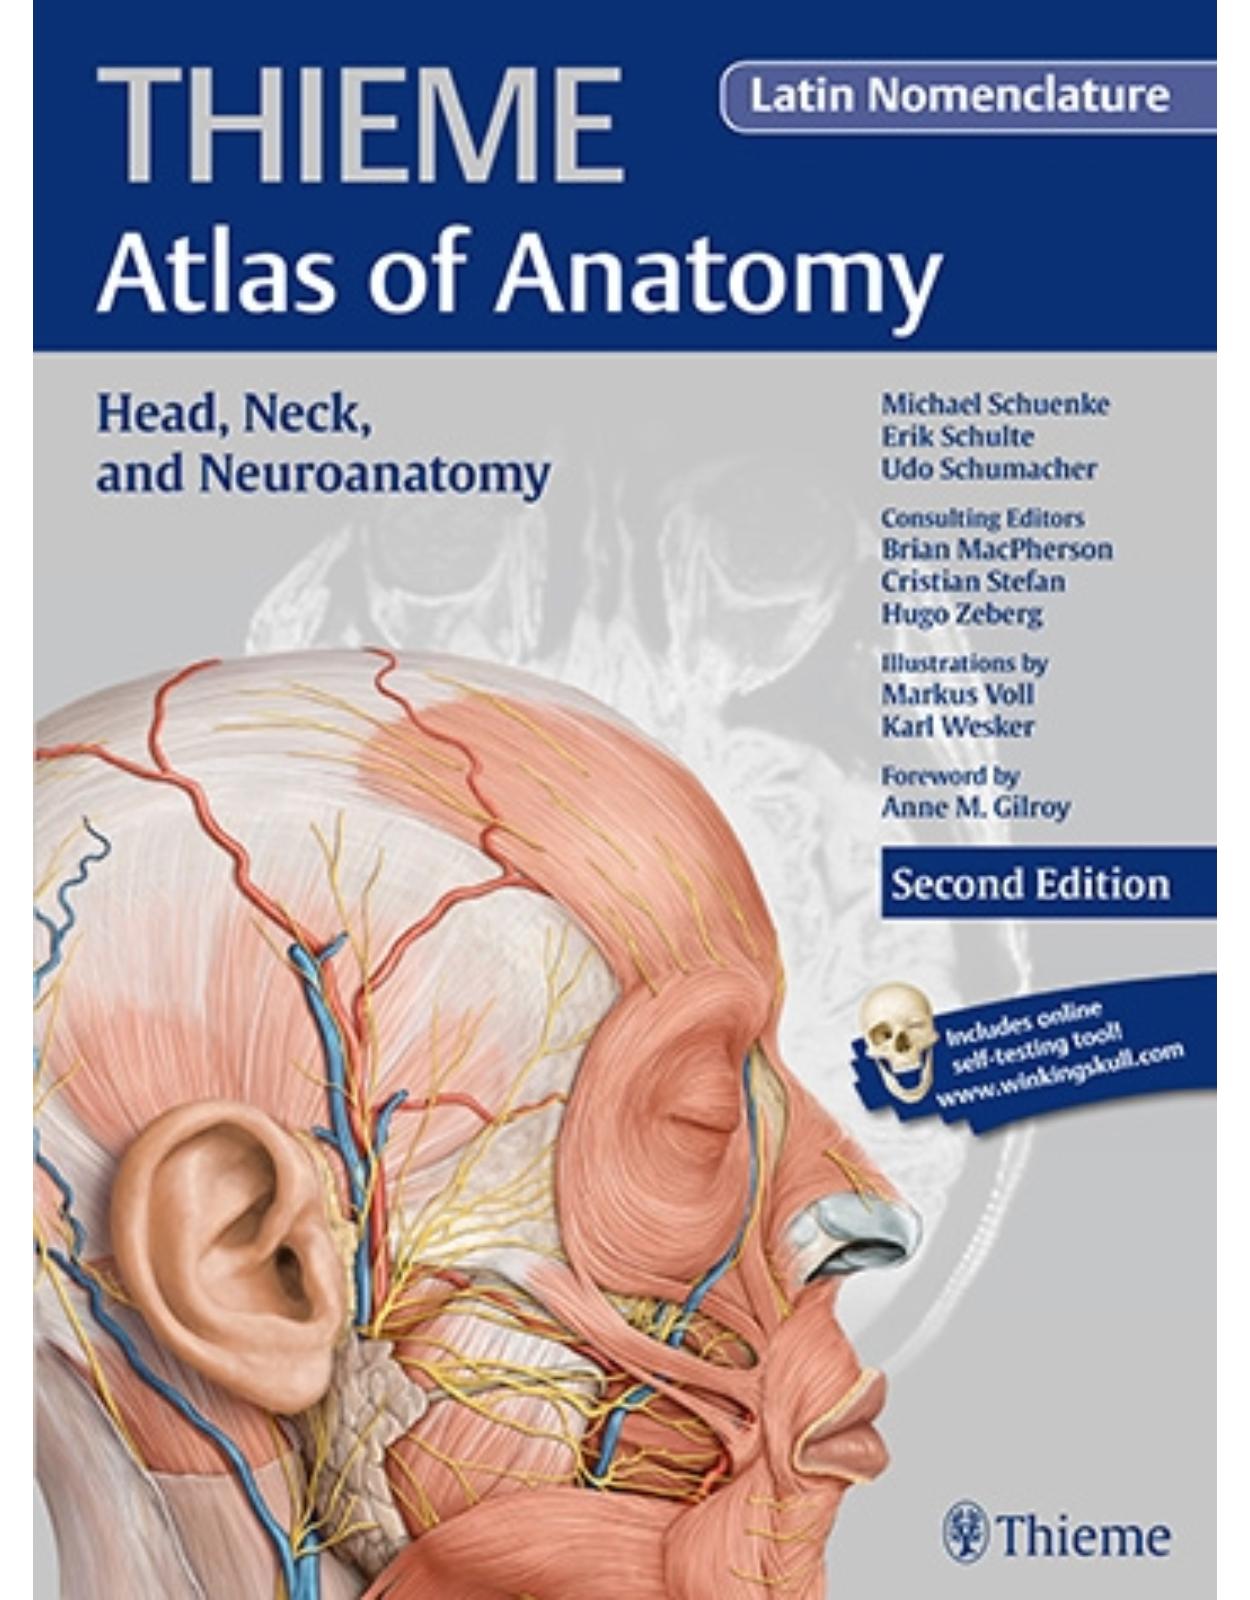 Head, Neck, and Neuroanatomy (THIEME Atlas of Anatomy), Latin nomenclature